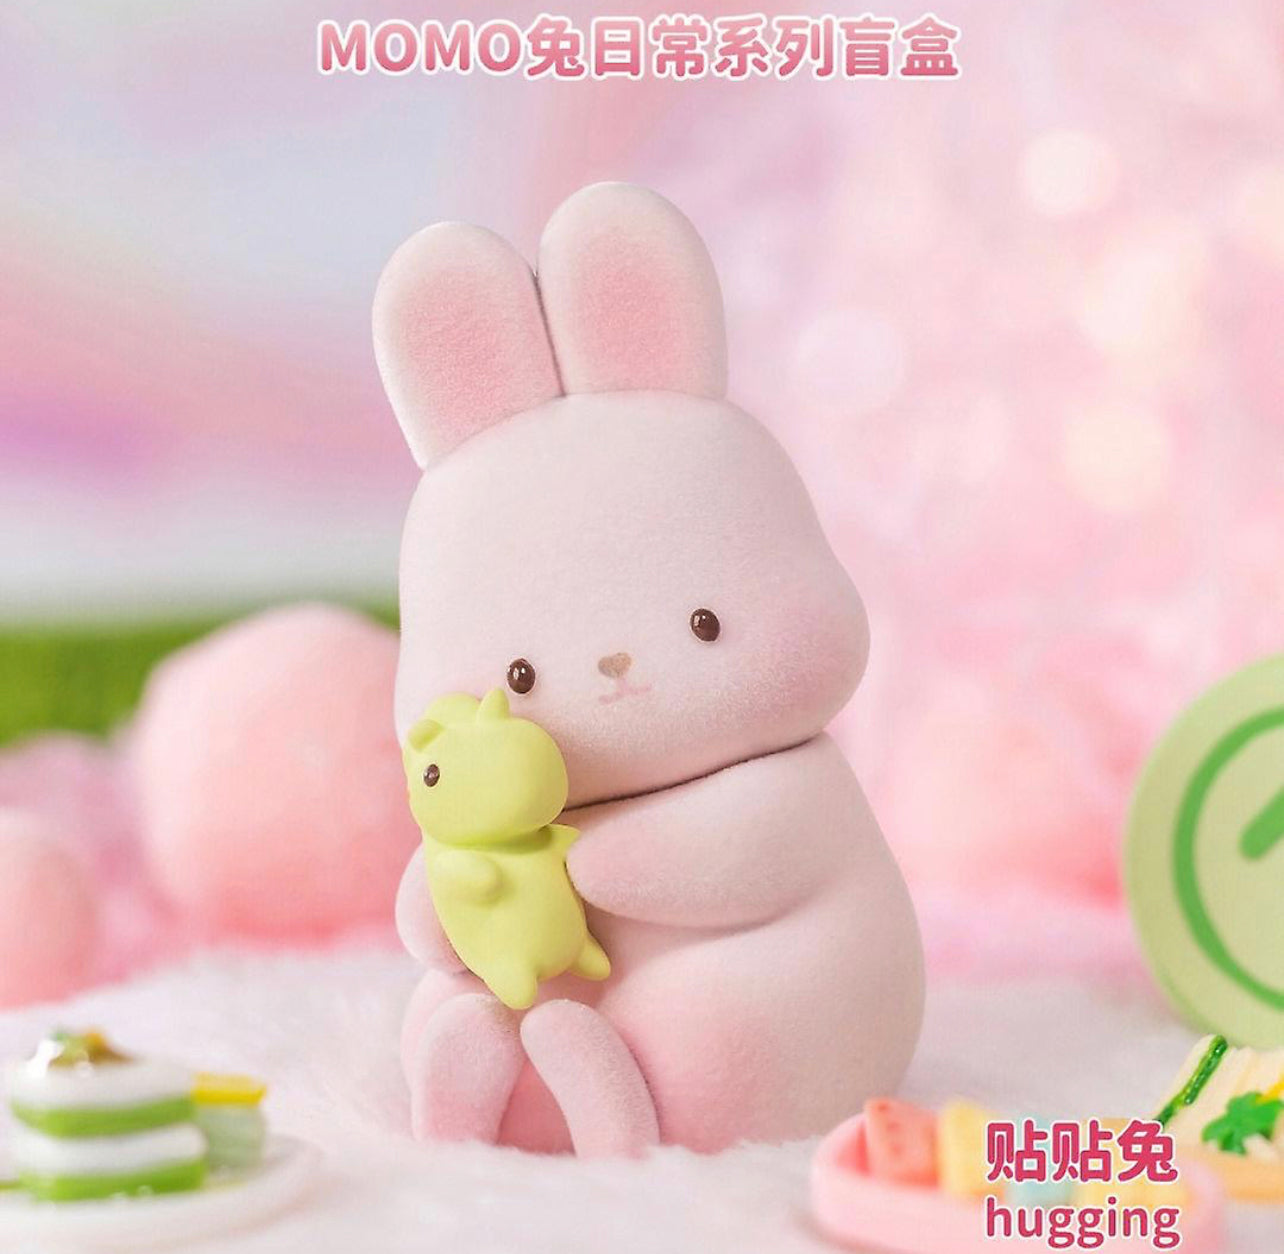 Momoko Momo Bunny Daily Series 2 Blind Box by FUNISM